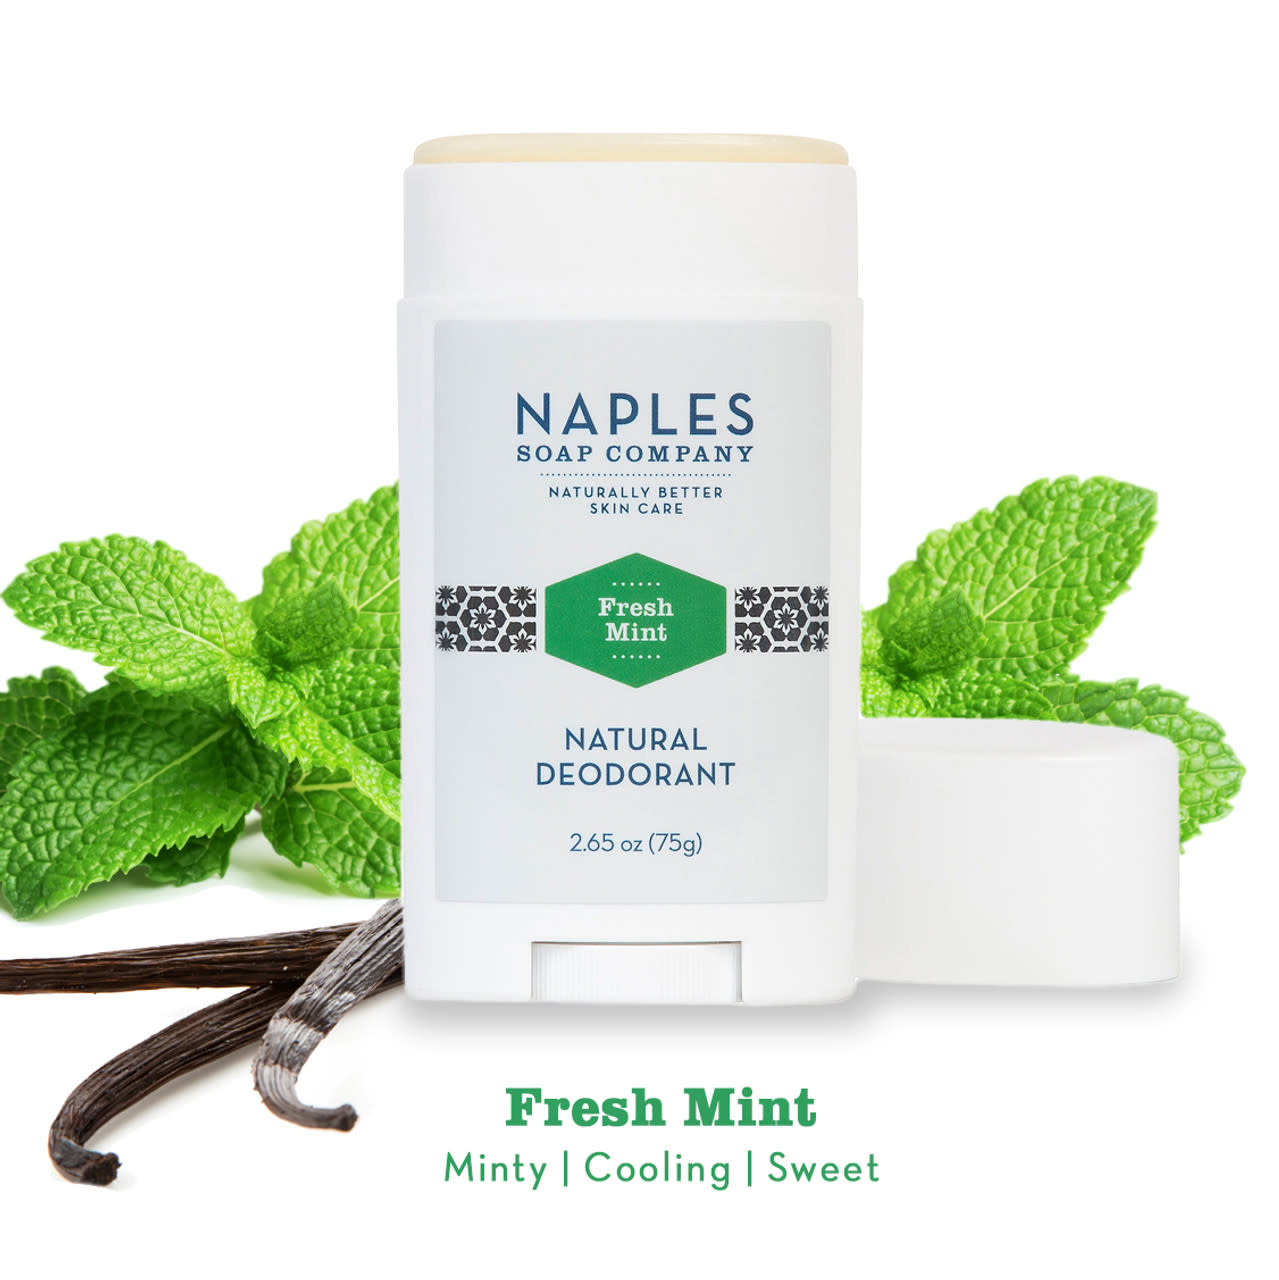 Naples Soap Co. Fresh Mint Deodorant